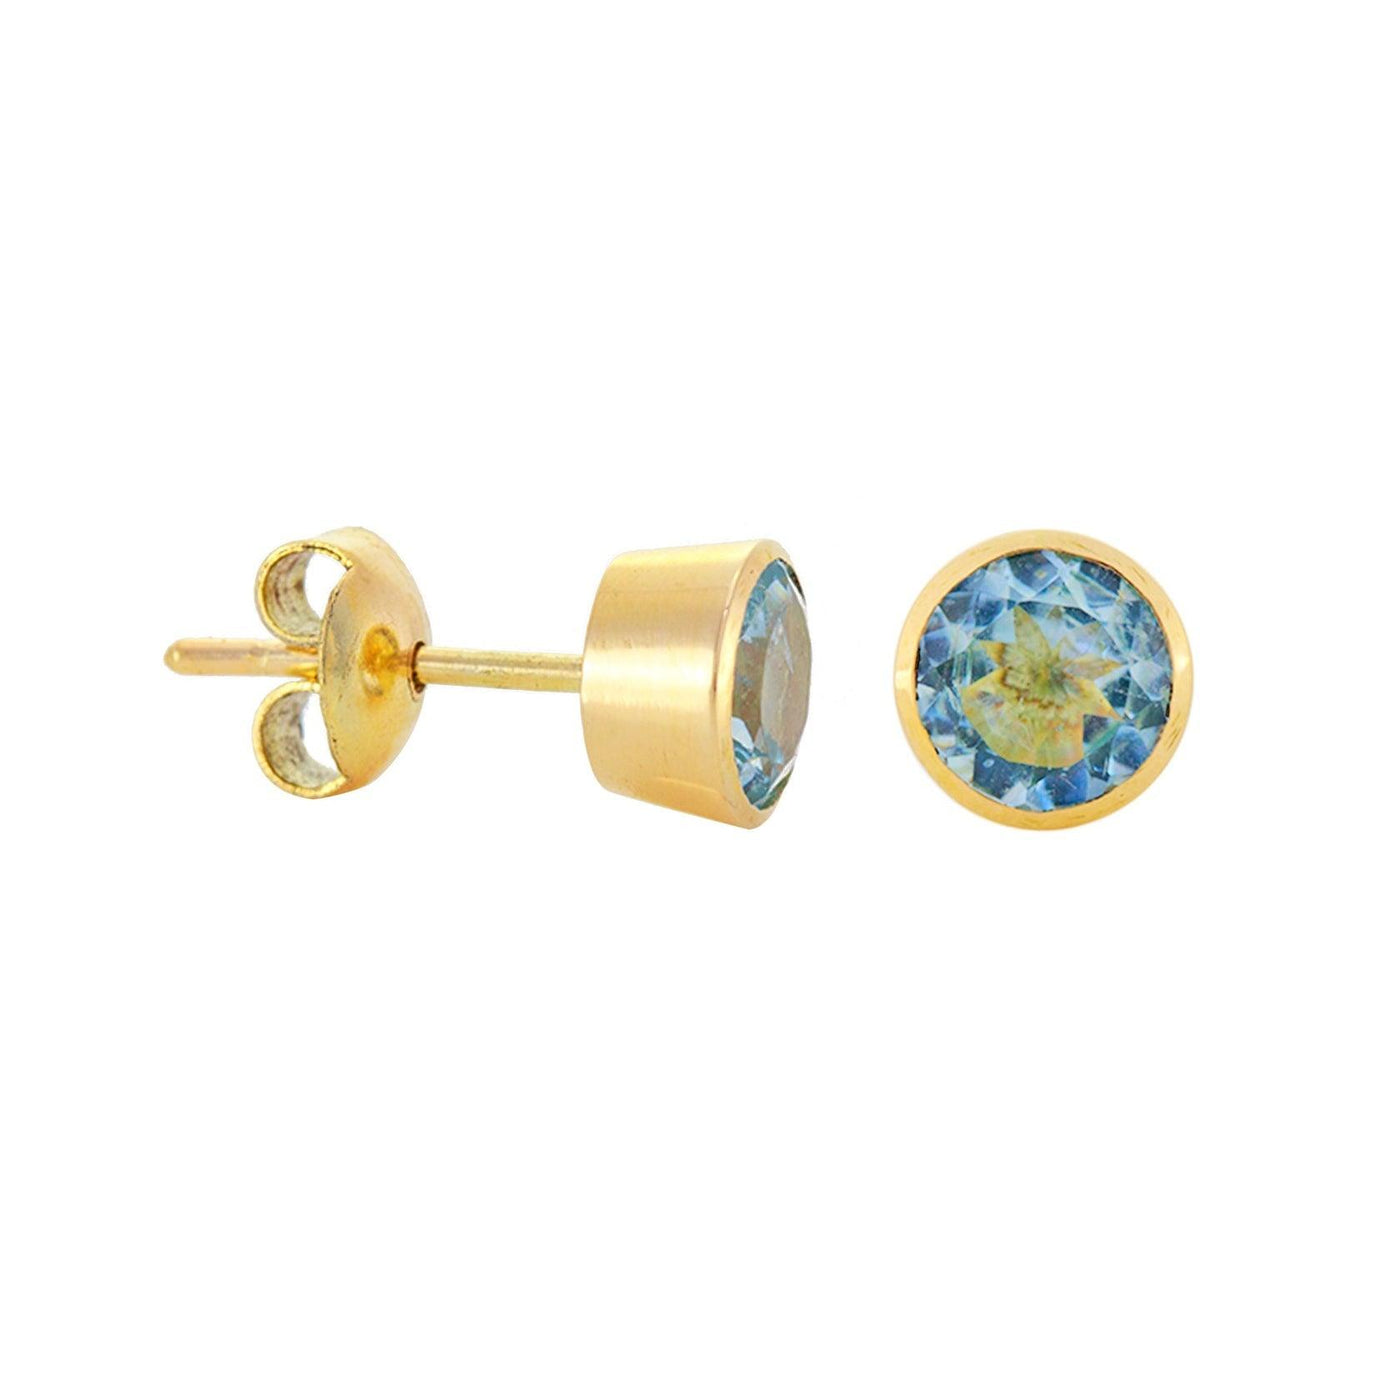 Simon Alexander 9ct Yellow Gold and Aquamarine Round Stud Earrings - Rococo Jewellery